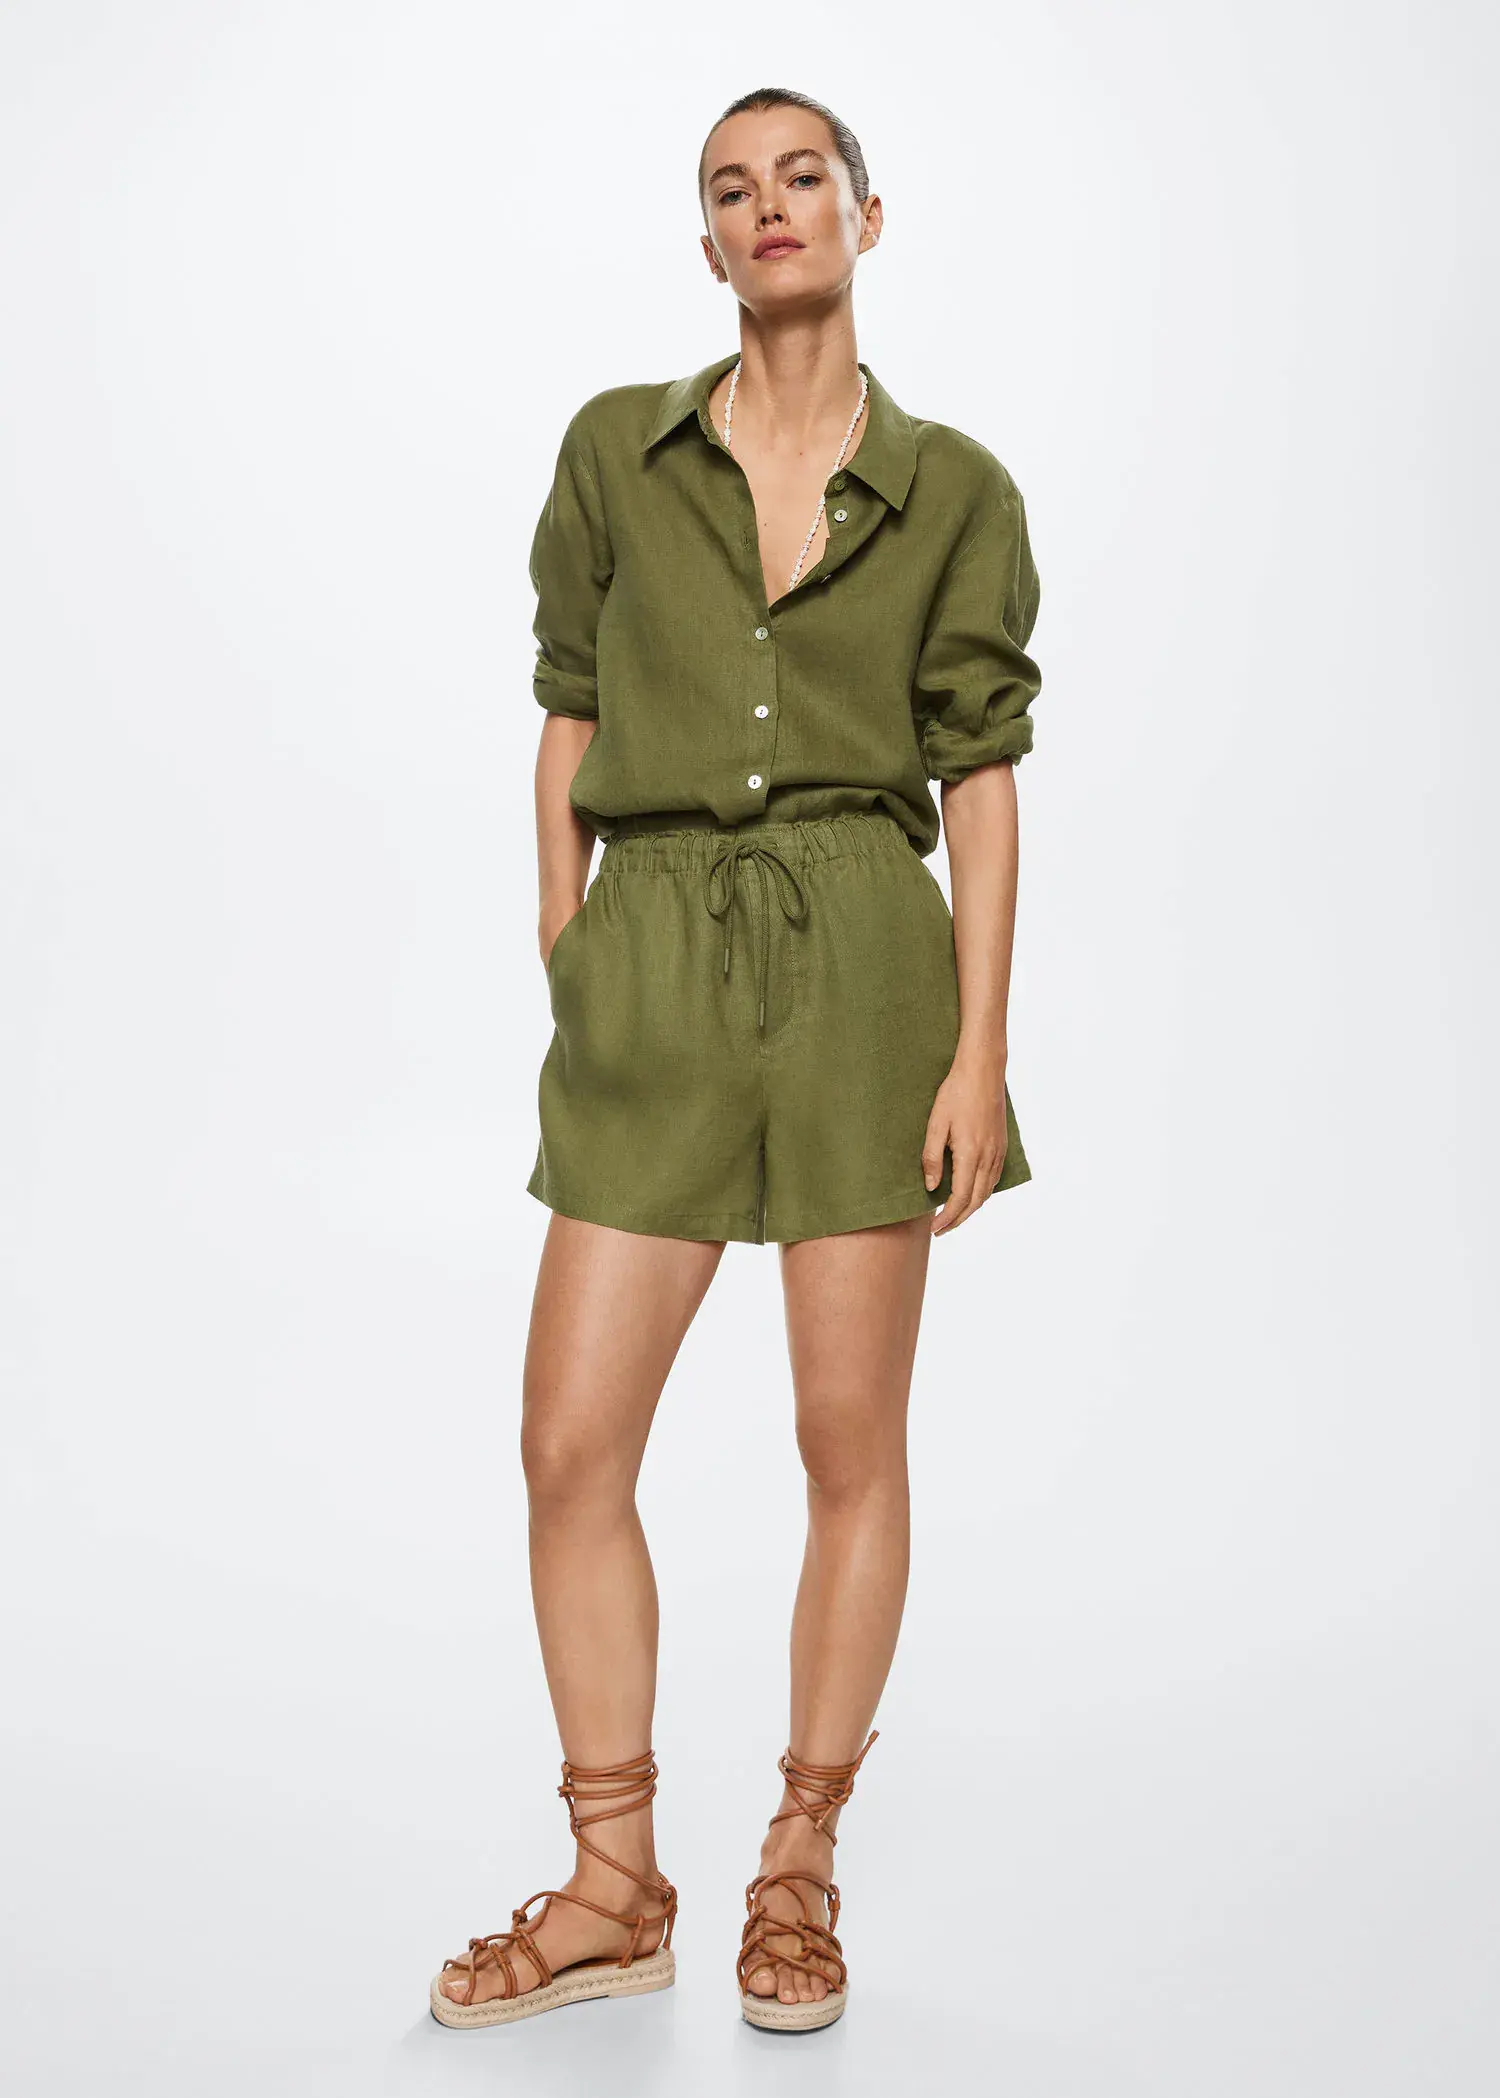 Mango 100% linen shorts. a woman wearing a green shirt and shorts. 